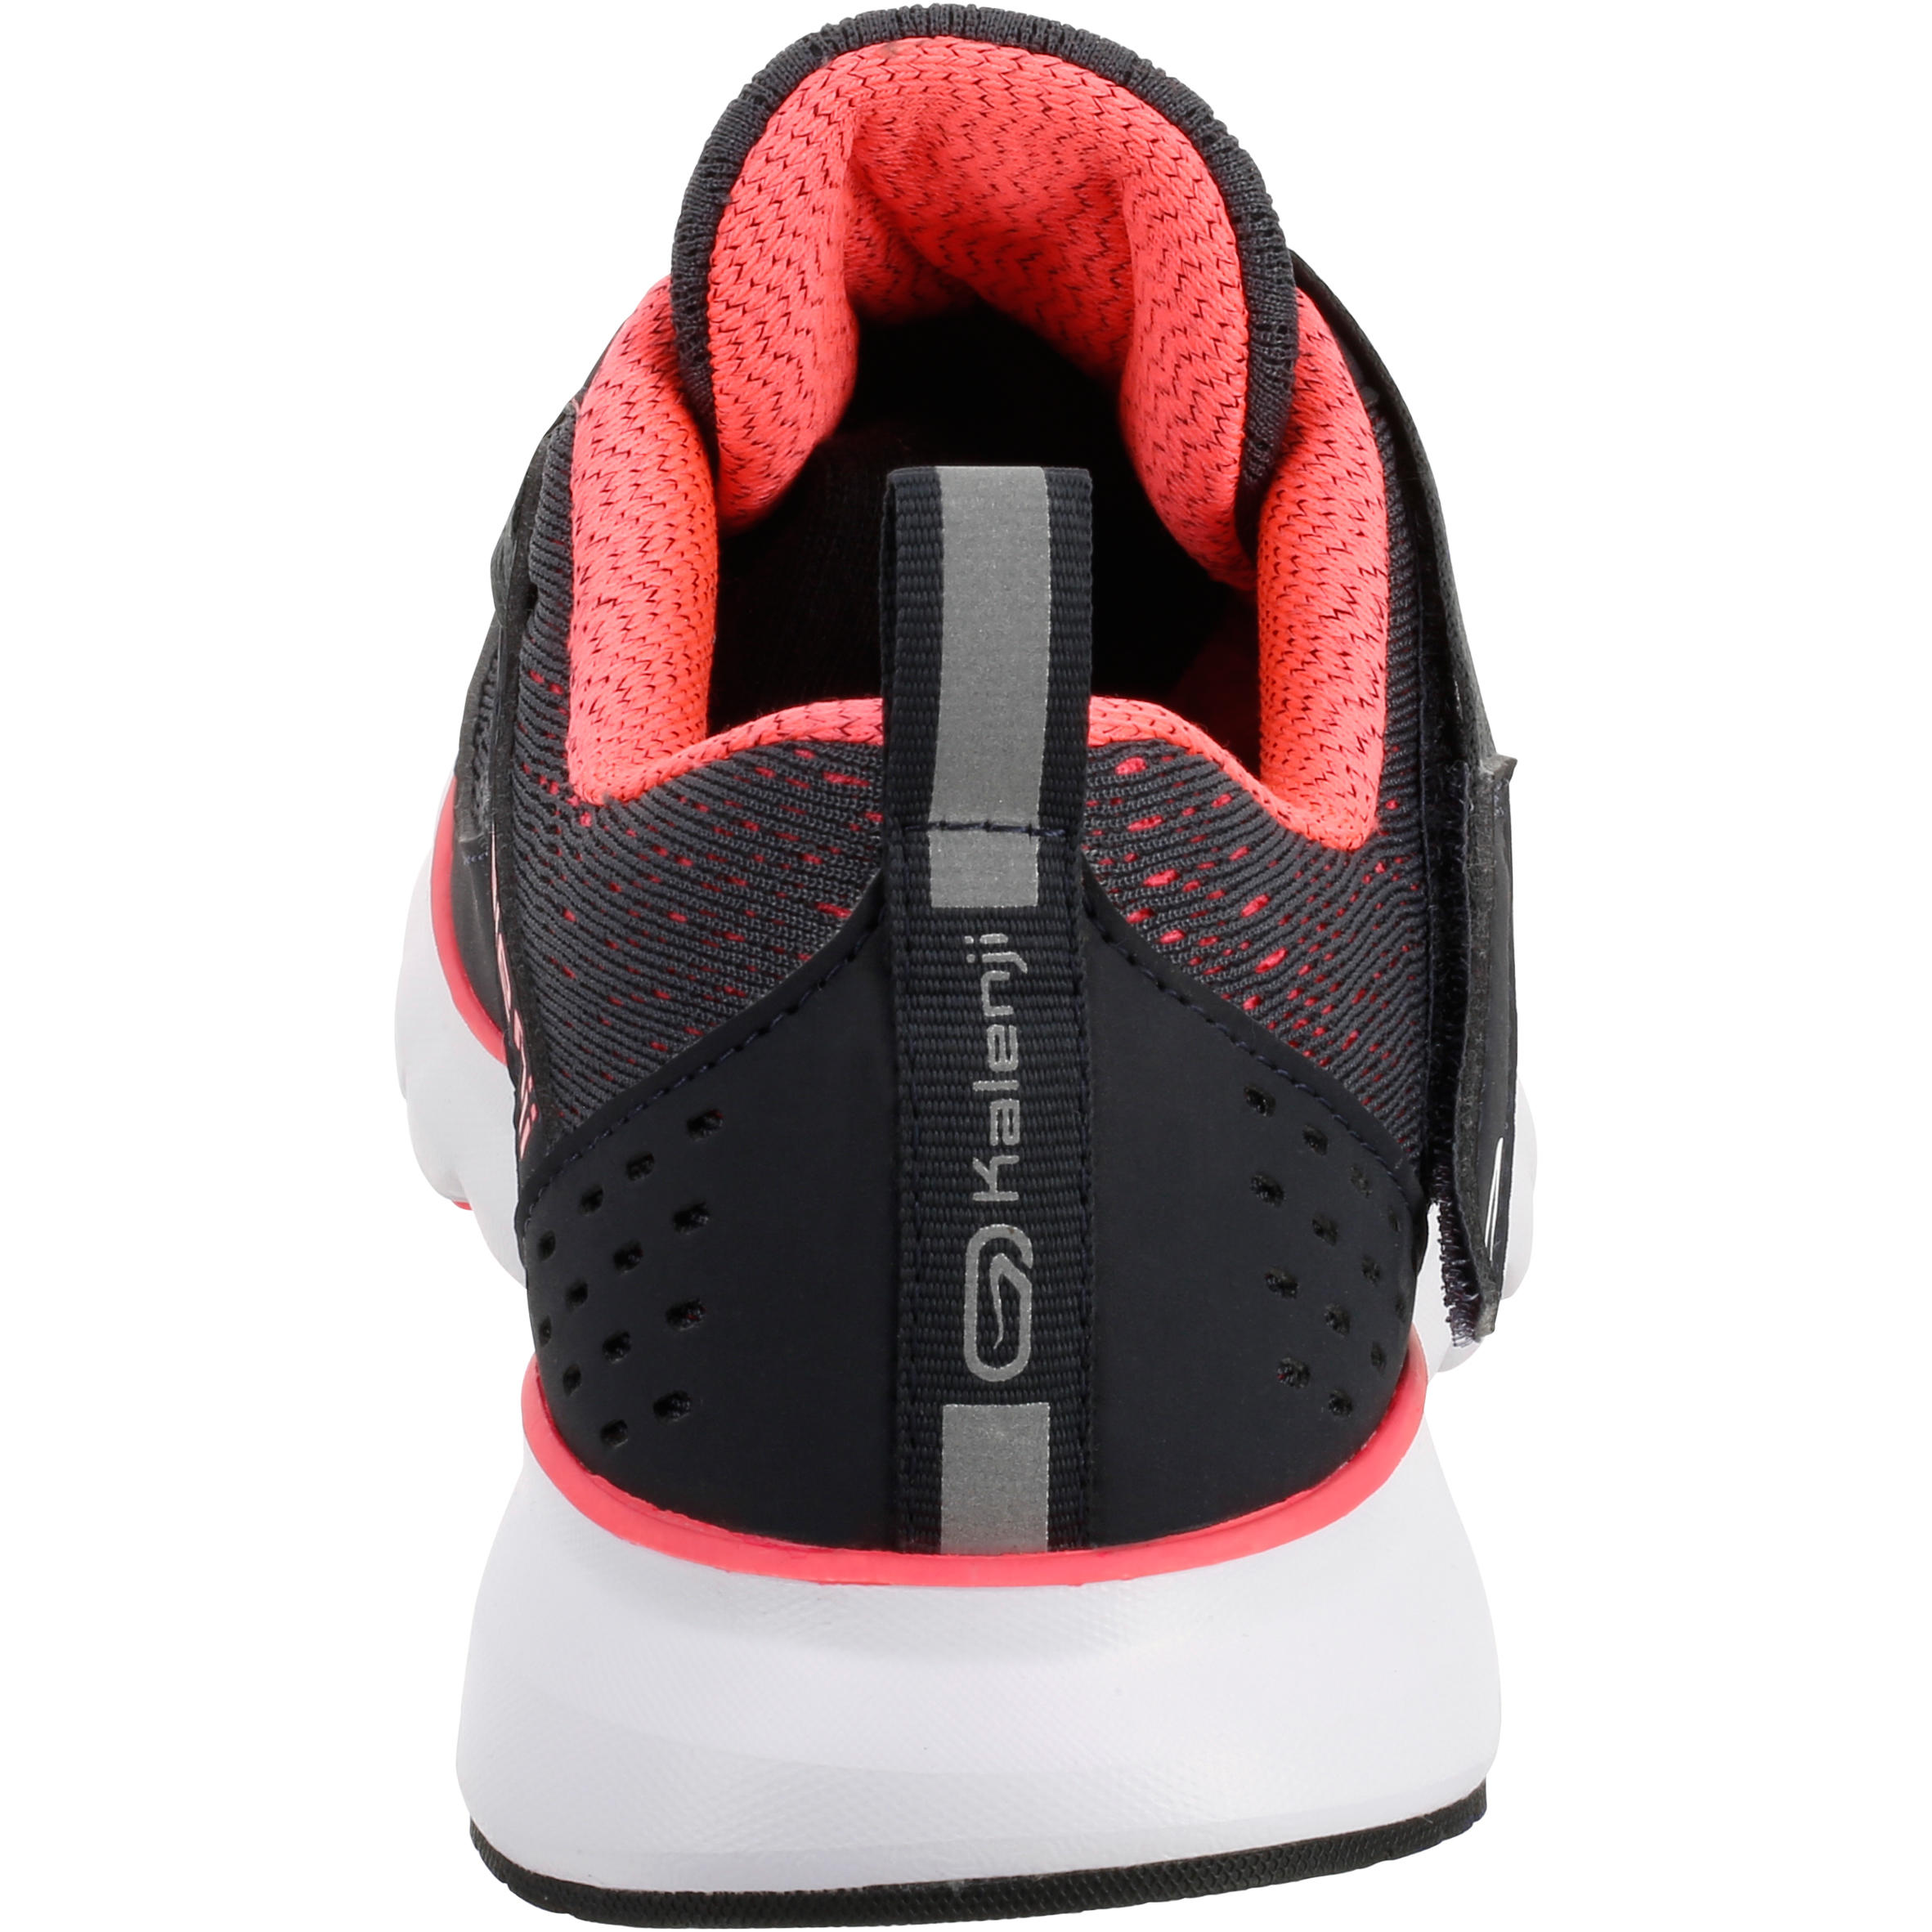 Run Eliofeet Women's Running Shoes - Grey/Pink  5/18